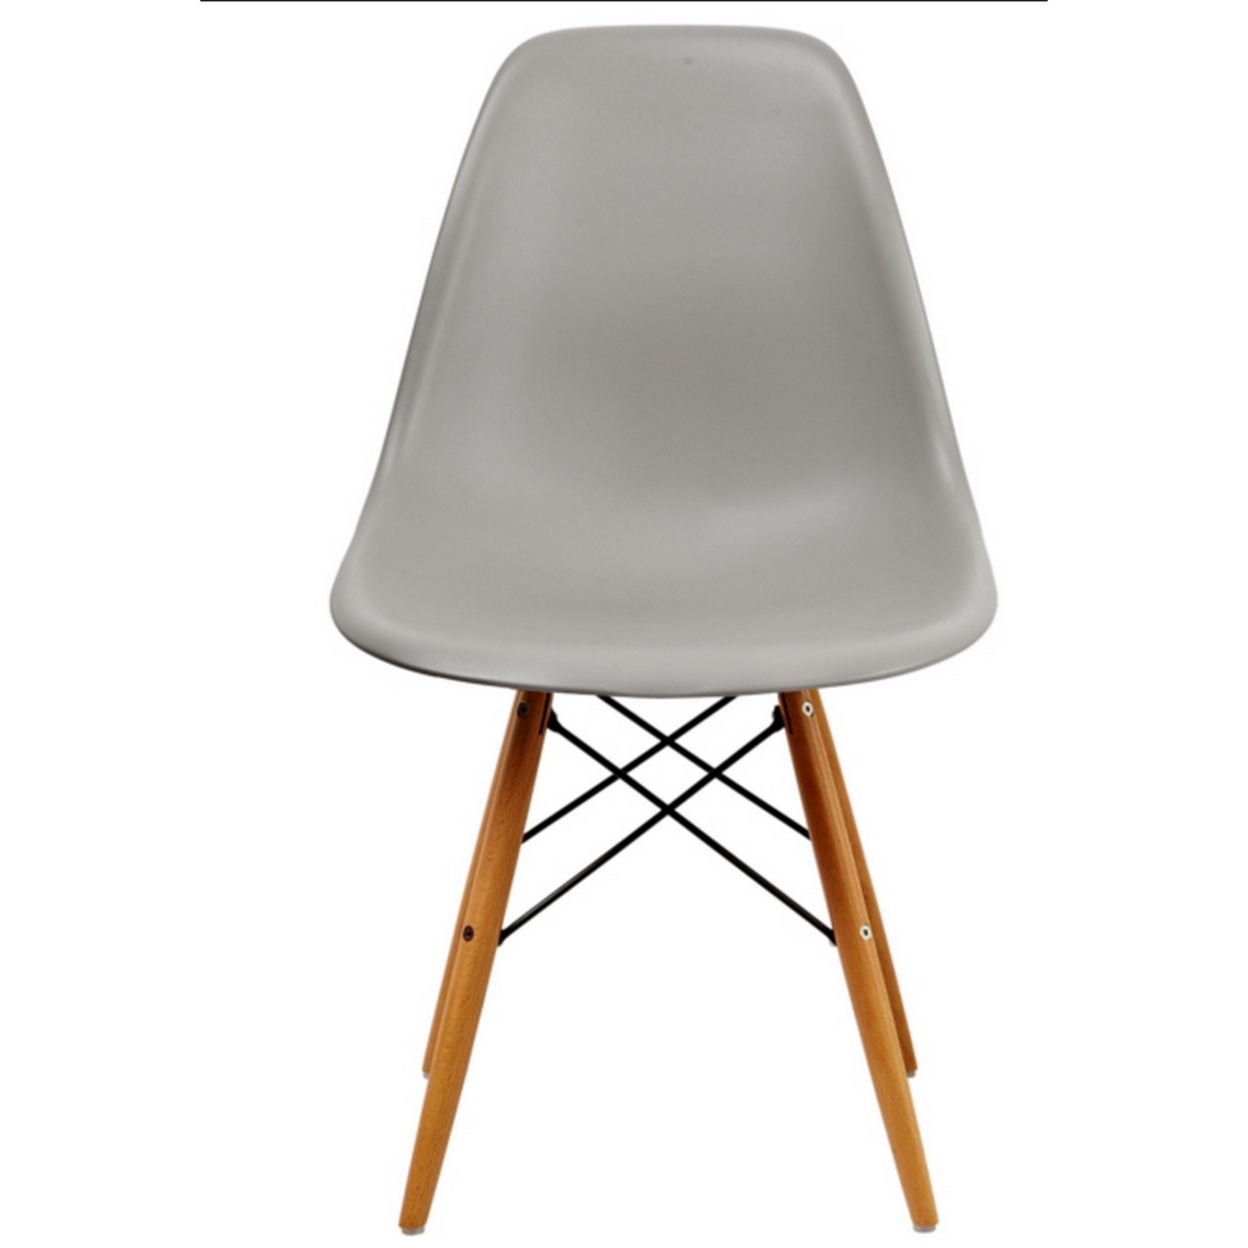 Louie 21 Inch Modern Side Chair, Wood Finished Legs, Smooth Gray Finish- Saltoro Sherpi